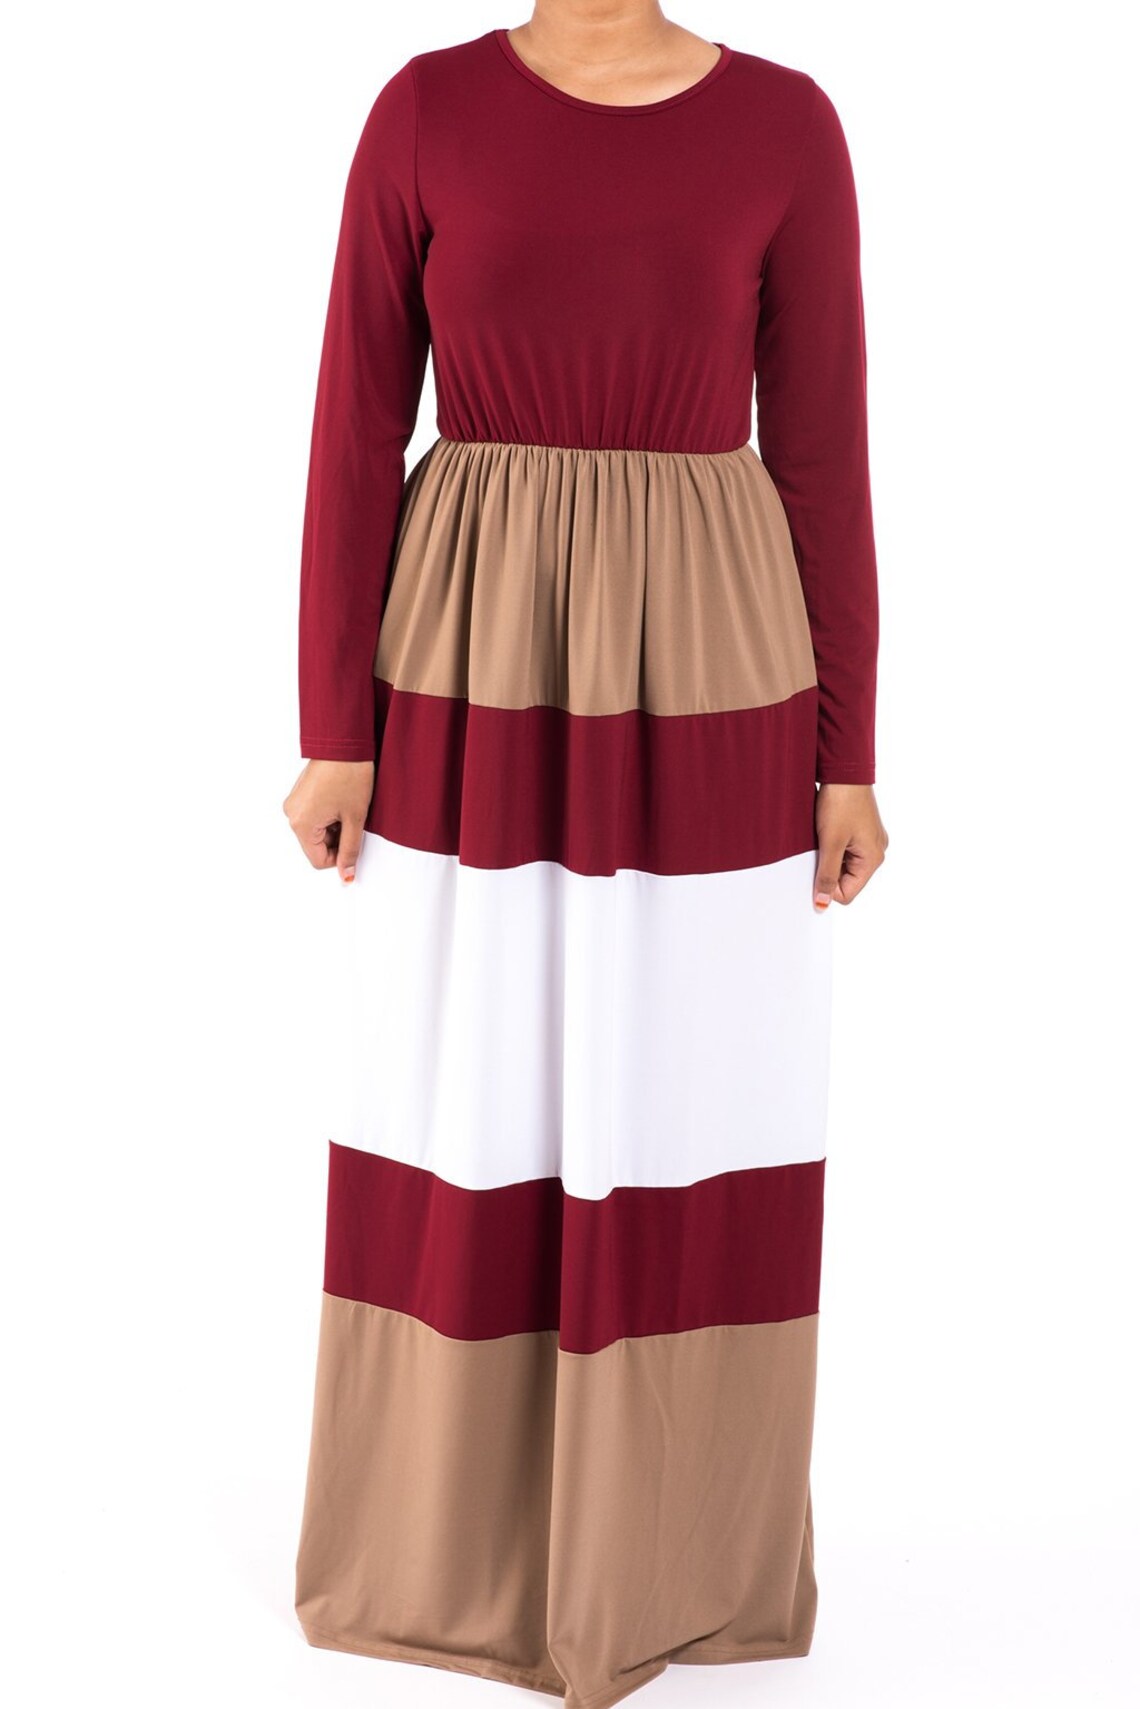 Maroon color-block maxi dressmodest fashion modest dresses | Etsy